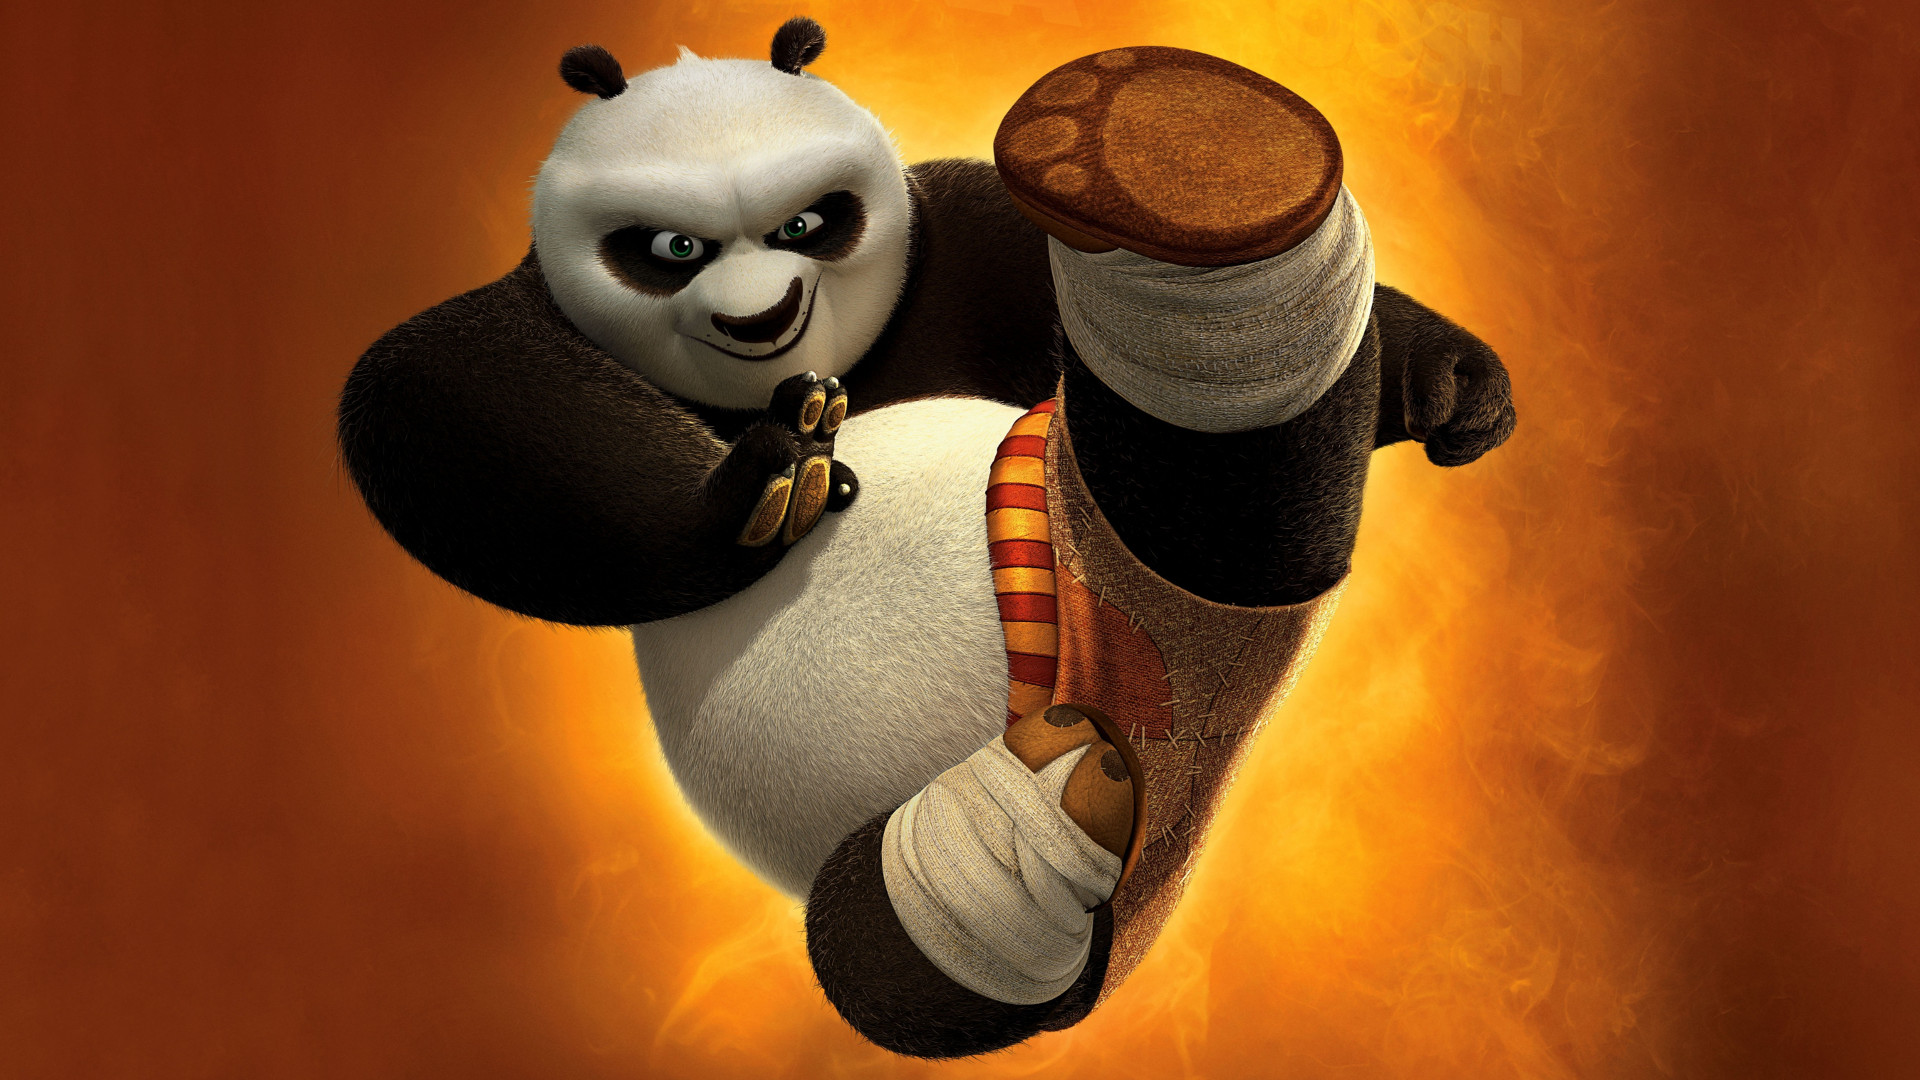 407221 descargar imagen po (kung fu panda), películas, kung fu panda 2, kung fu panda: fondos de pantalla y protectores de pantalla gratis